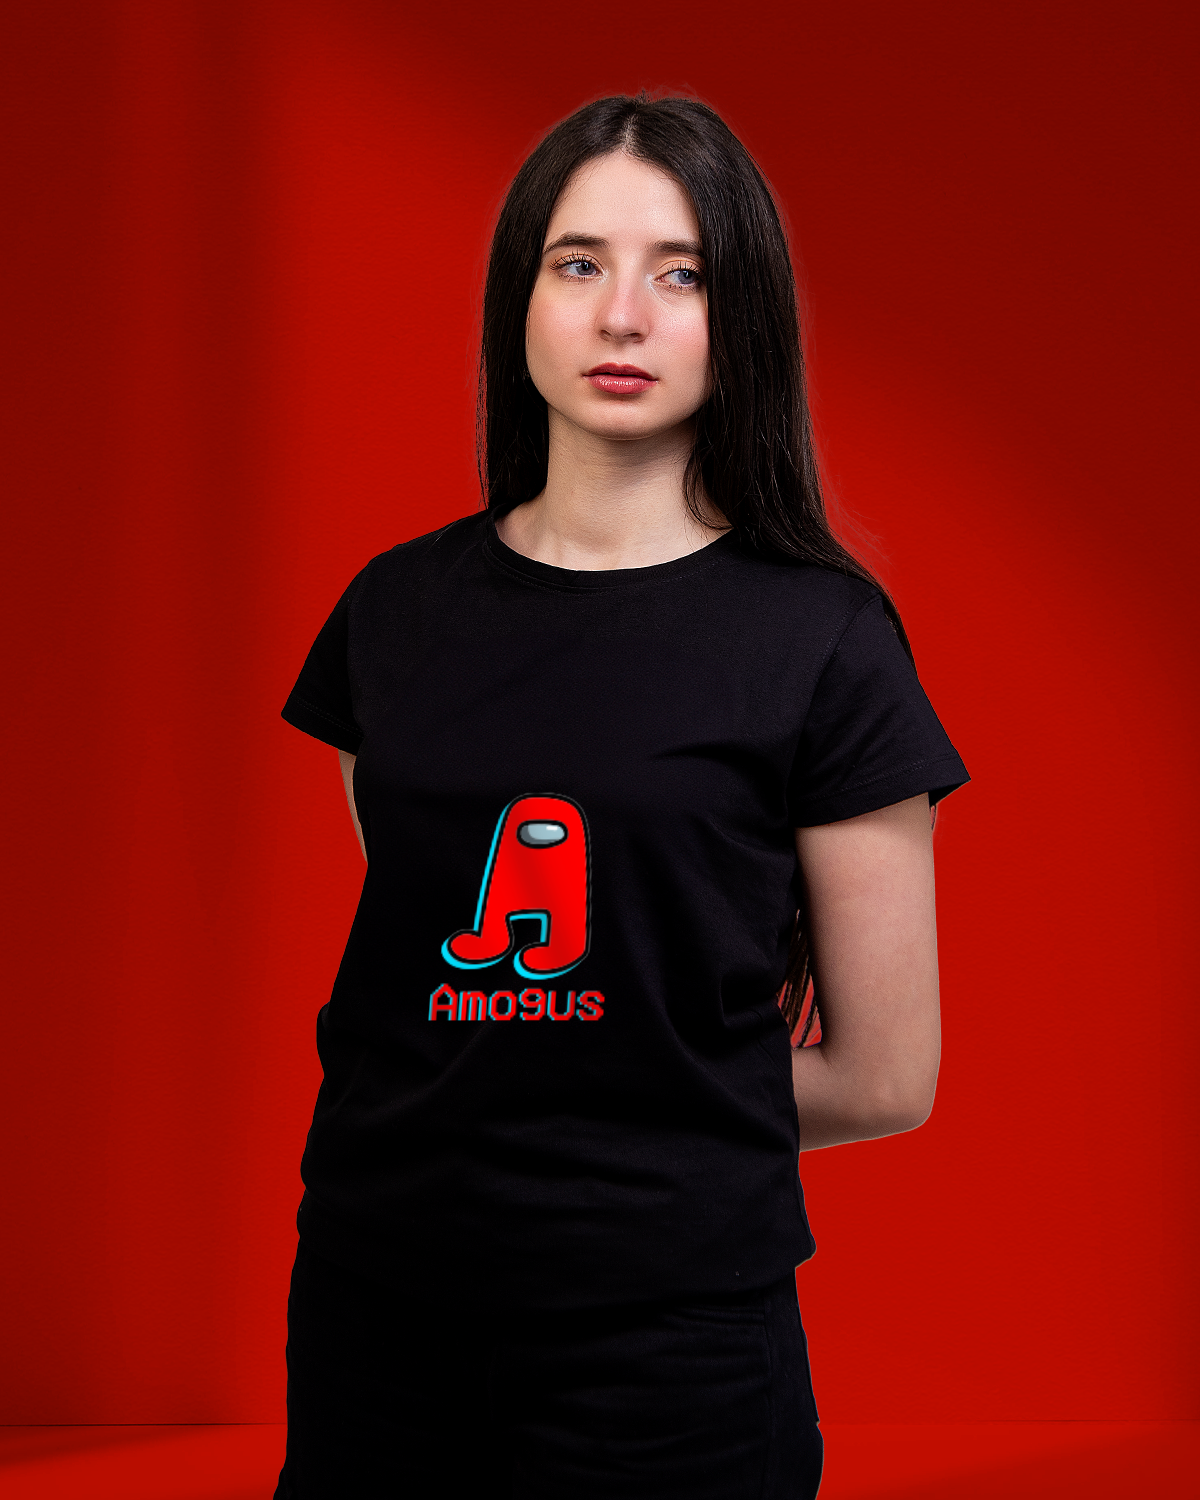 Women's T-Shirt (Amogus)